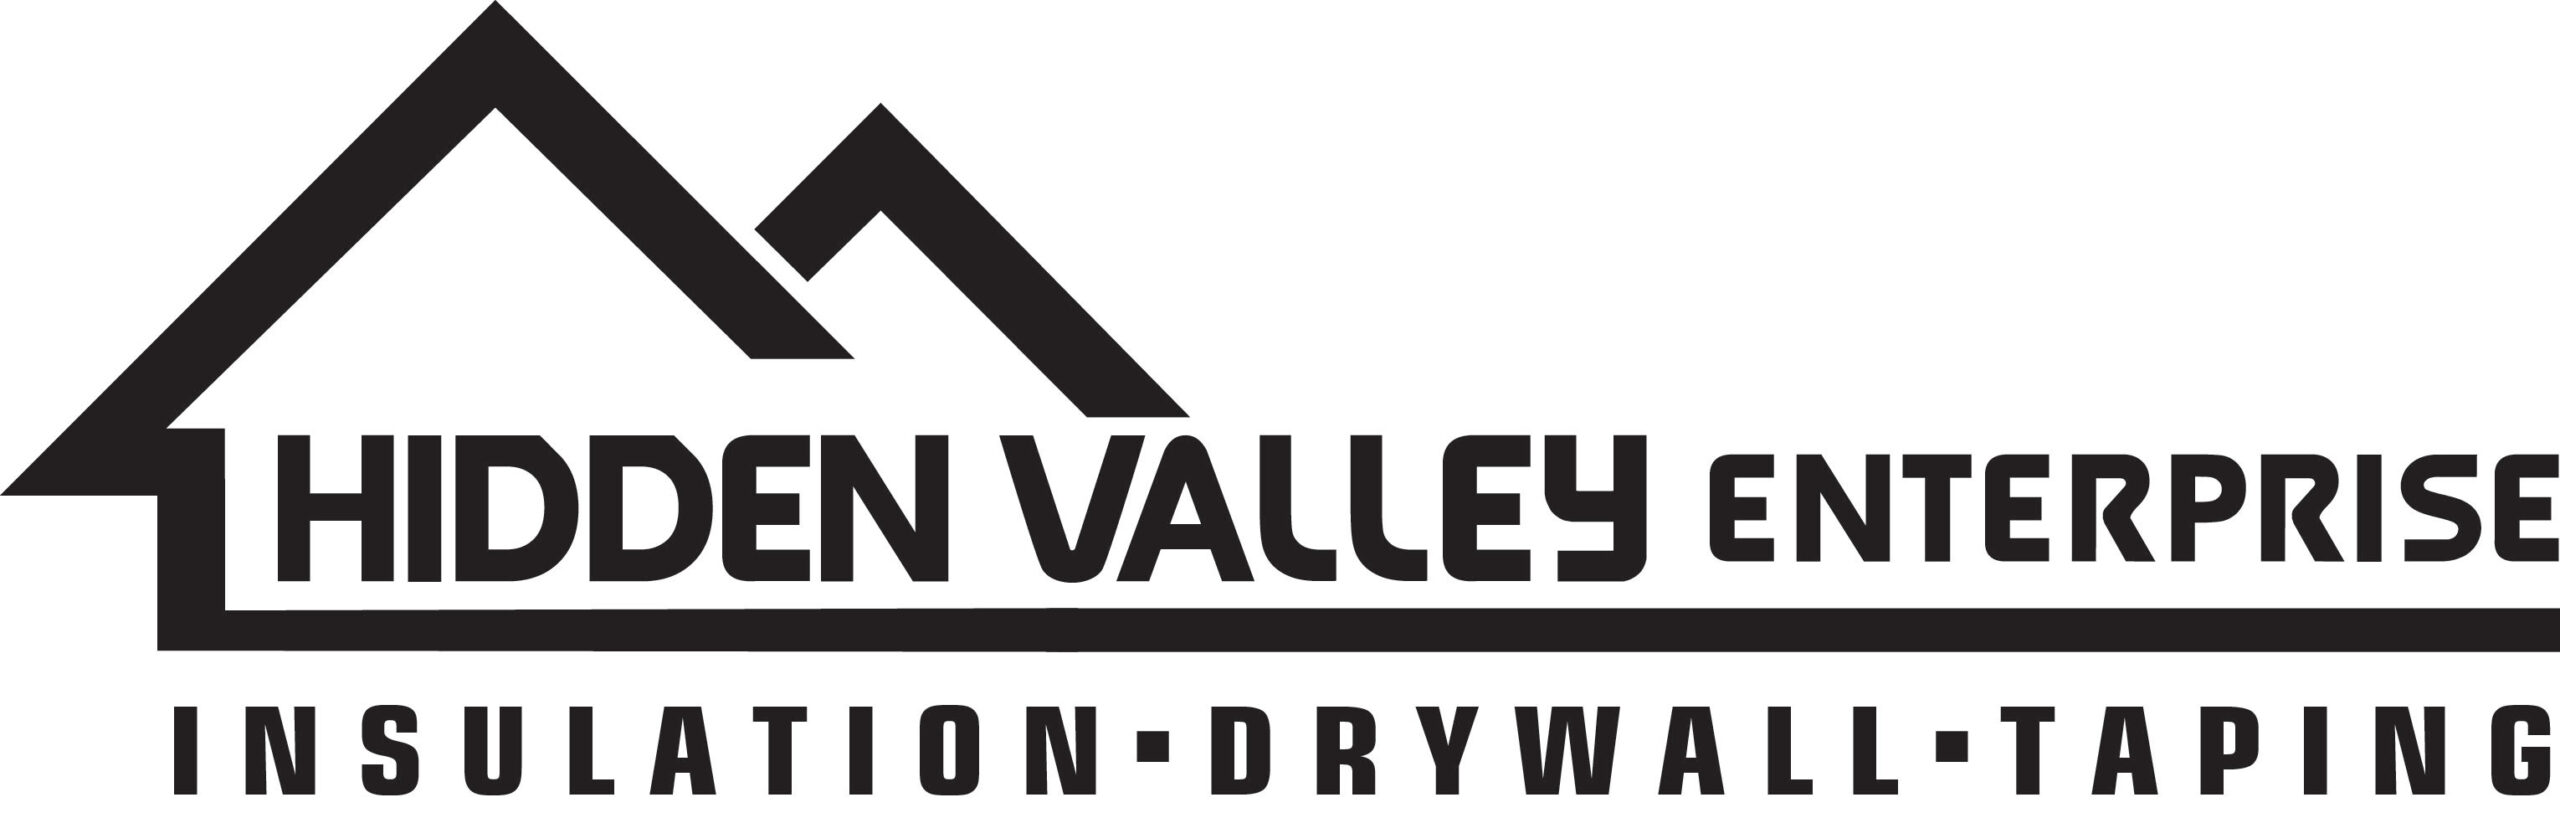 Hidden Valley Enterprise